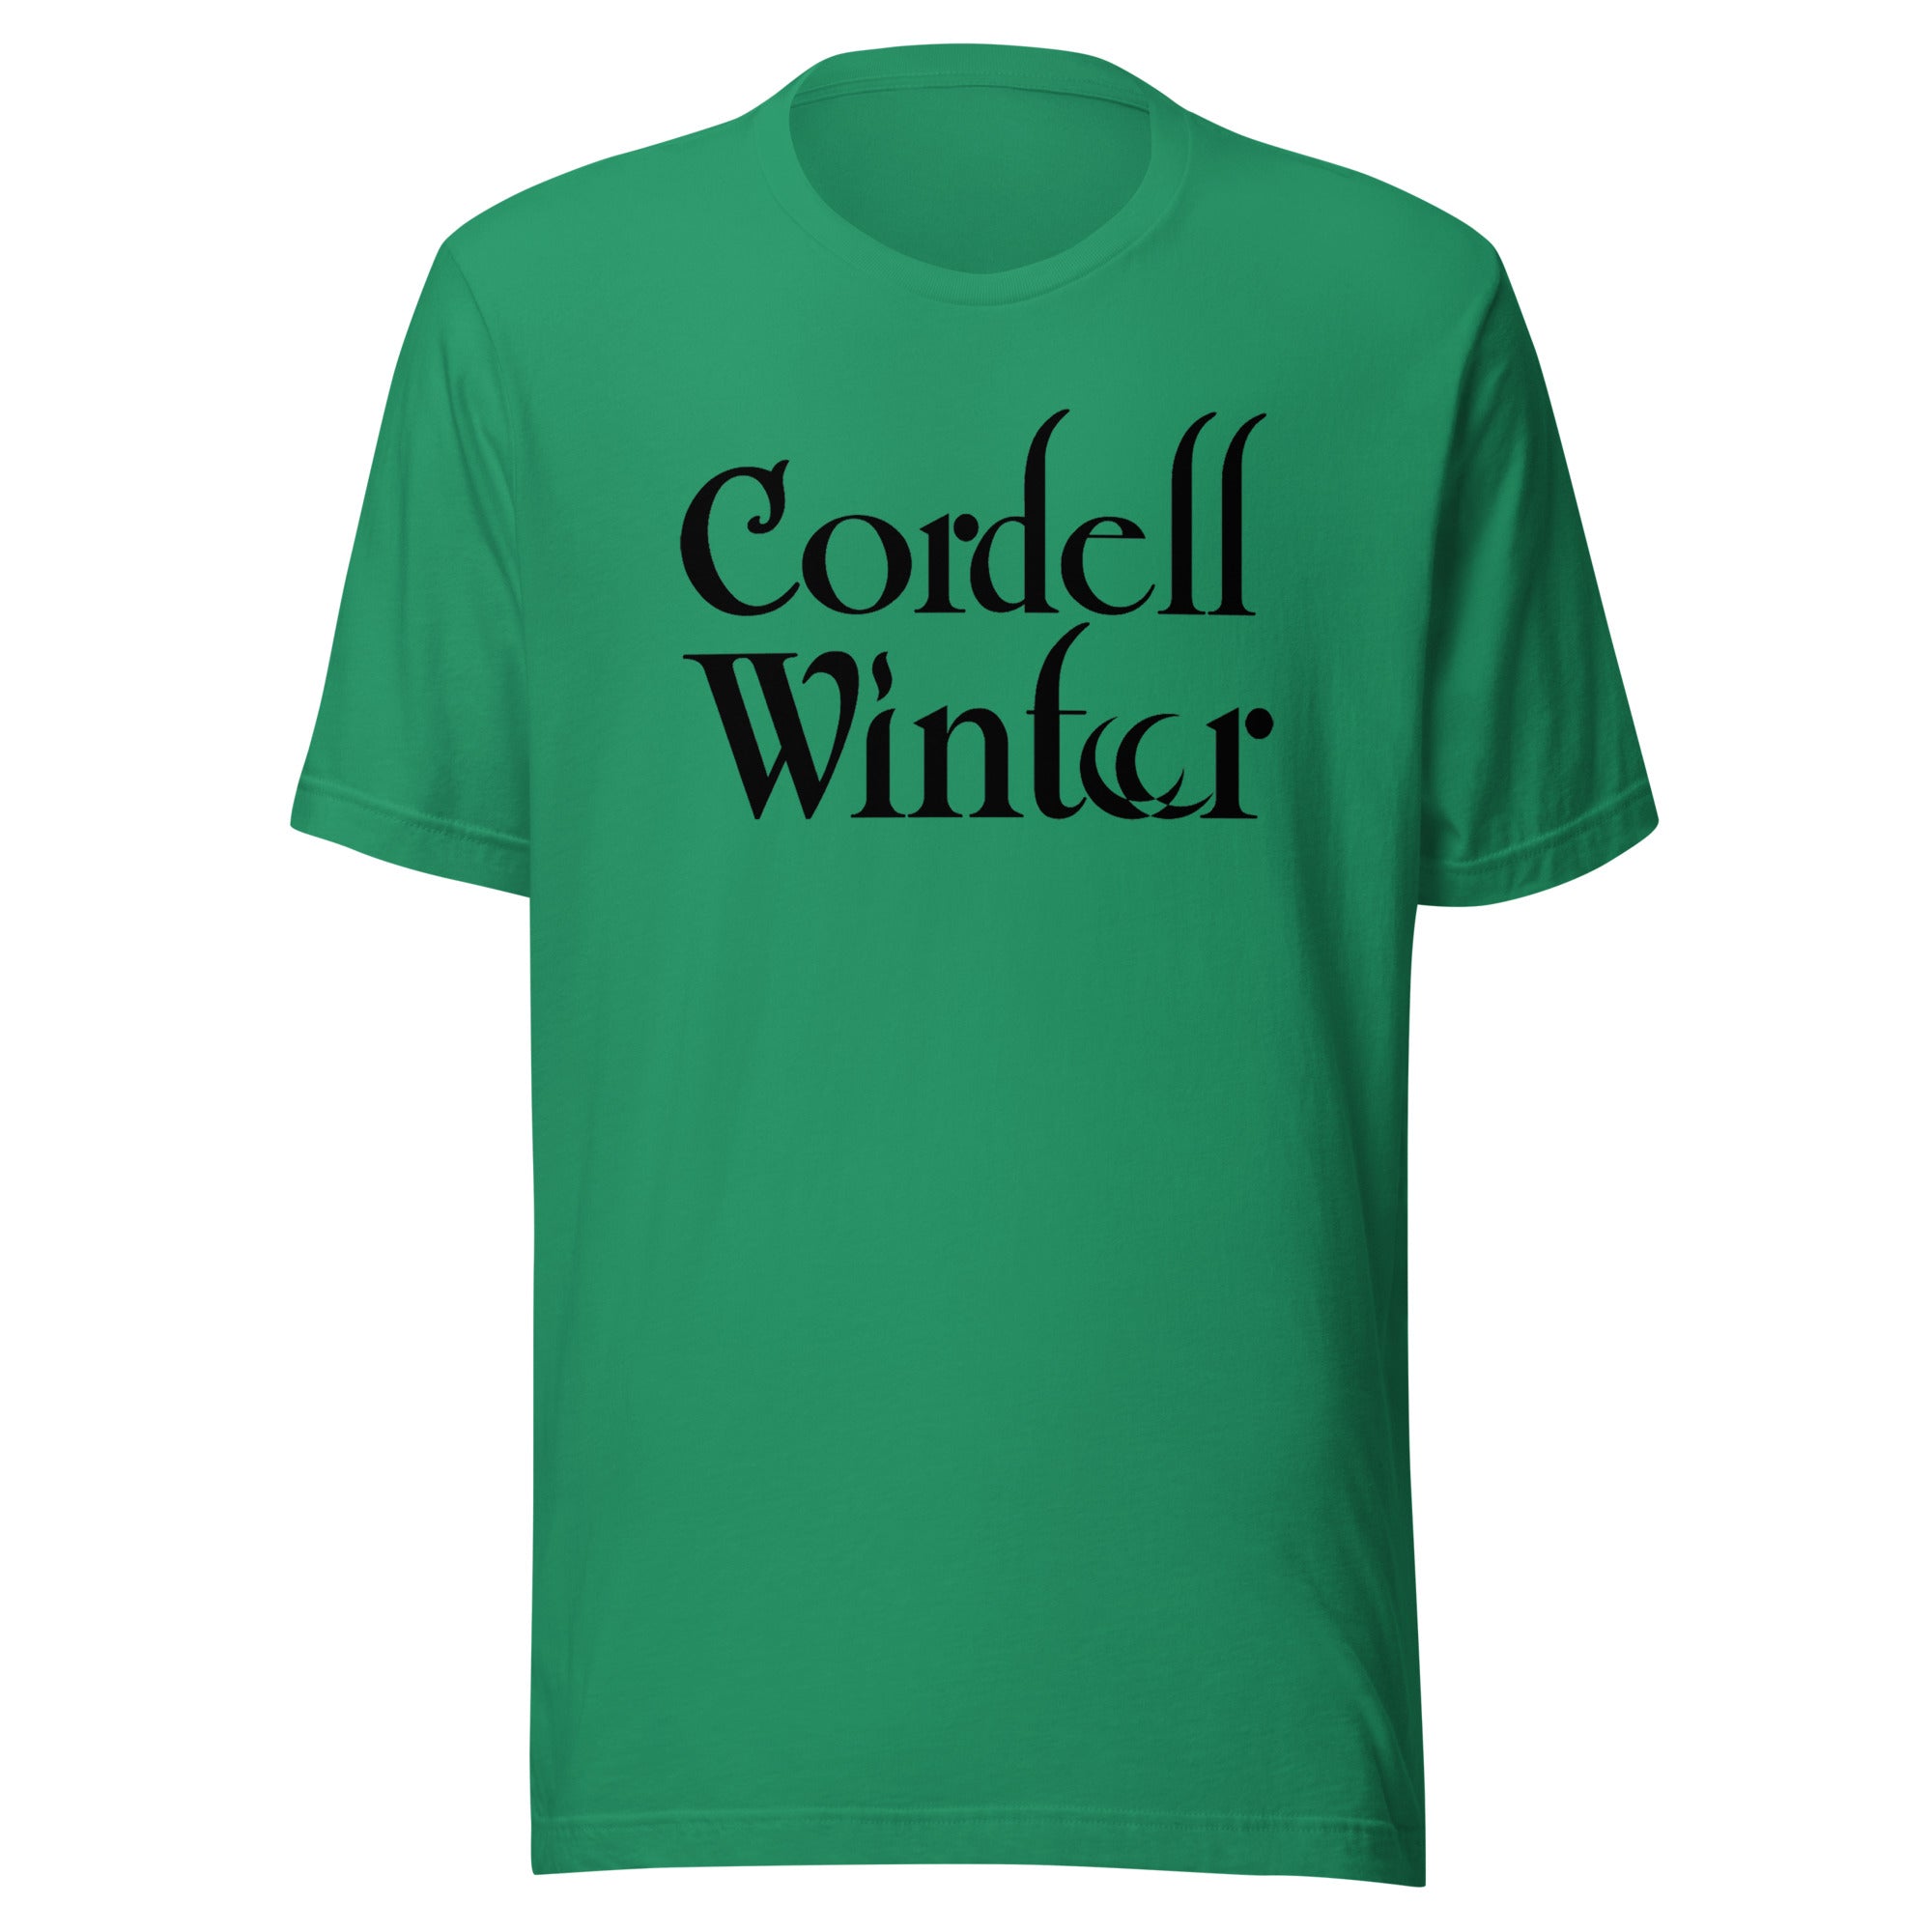 Cordell Winter - Unisex t-shirt